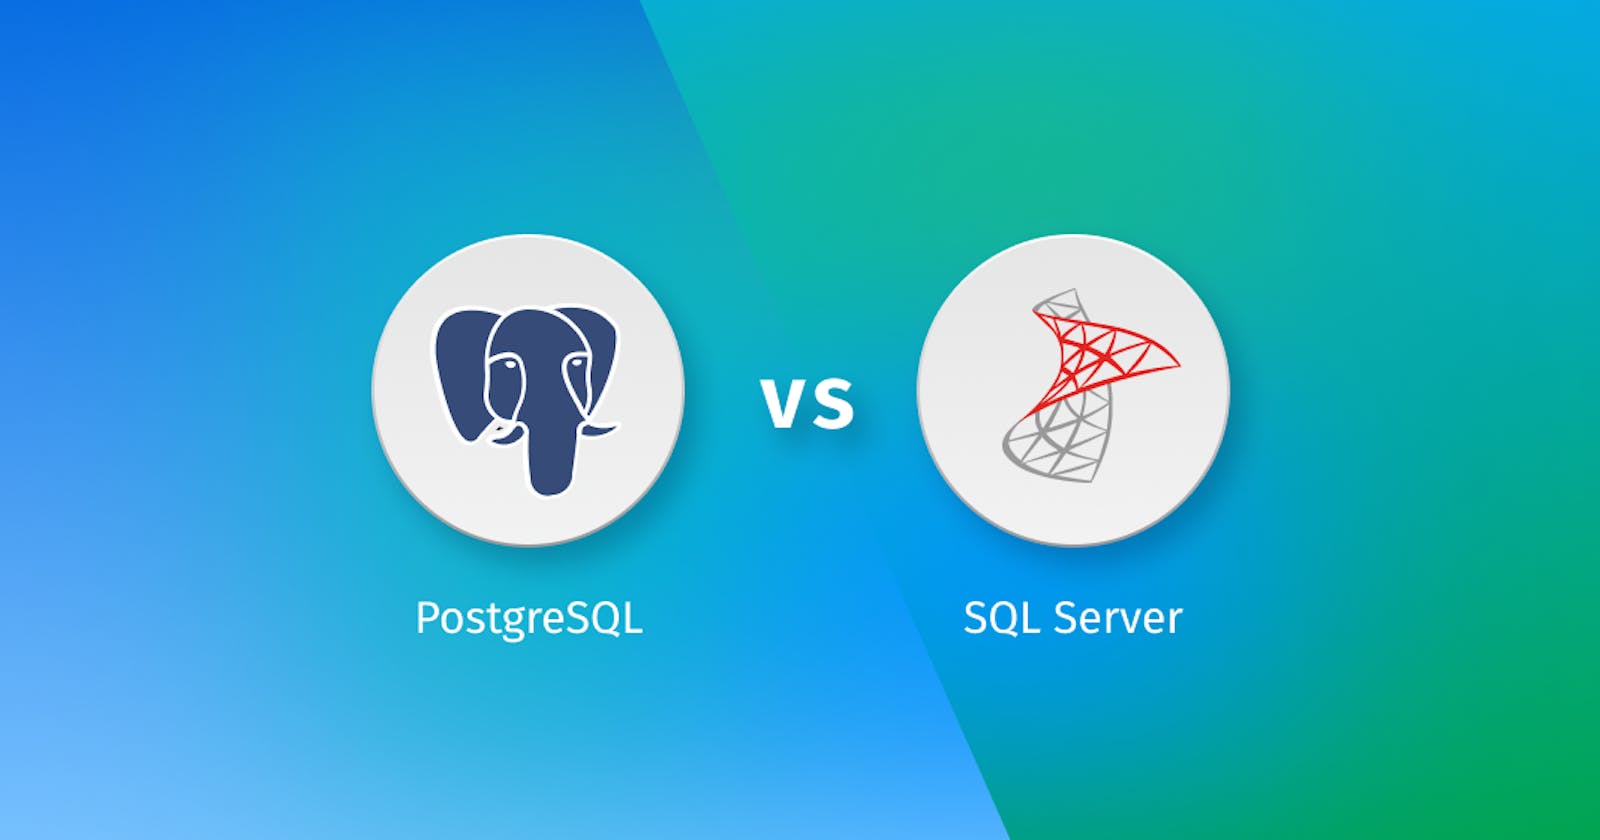 PostgreSQL vs SQL Server: What Are the Differences?